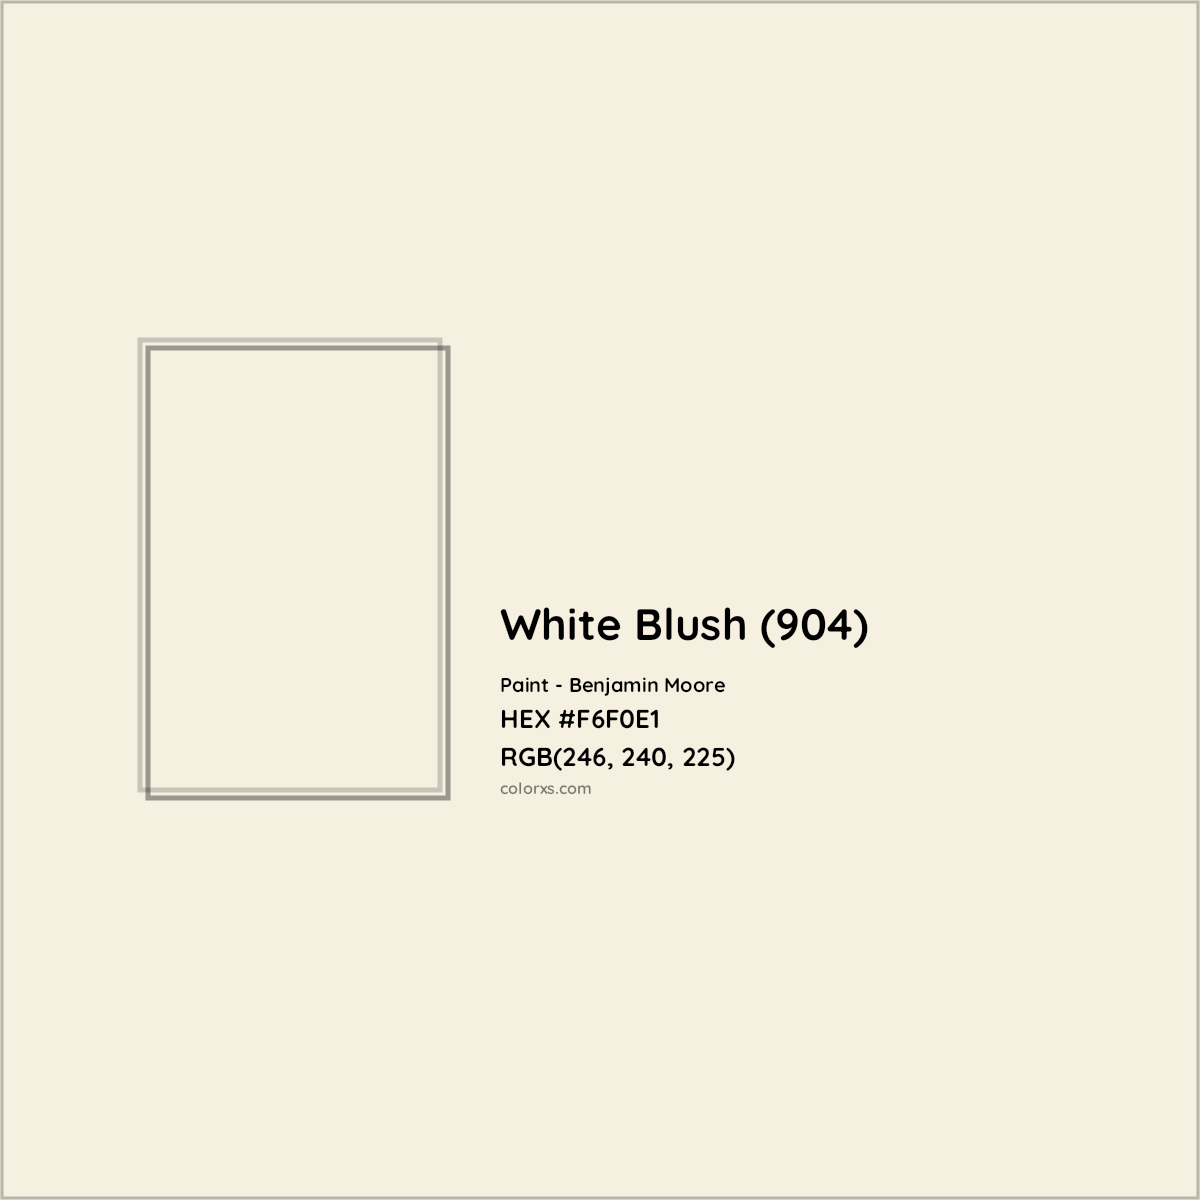 HEX #F6F0E1 White Blush (904) Paint Benjamin Moore - Color Code